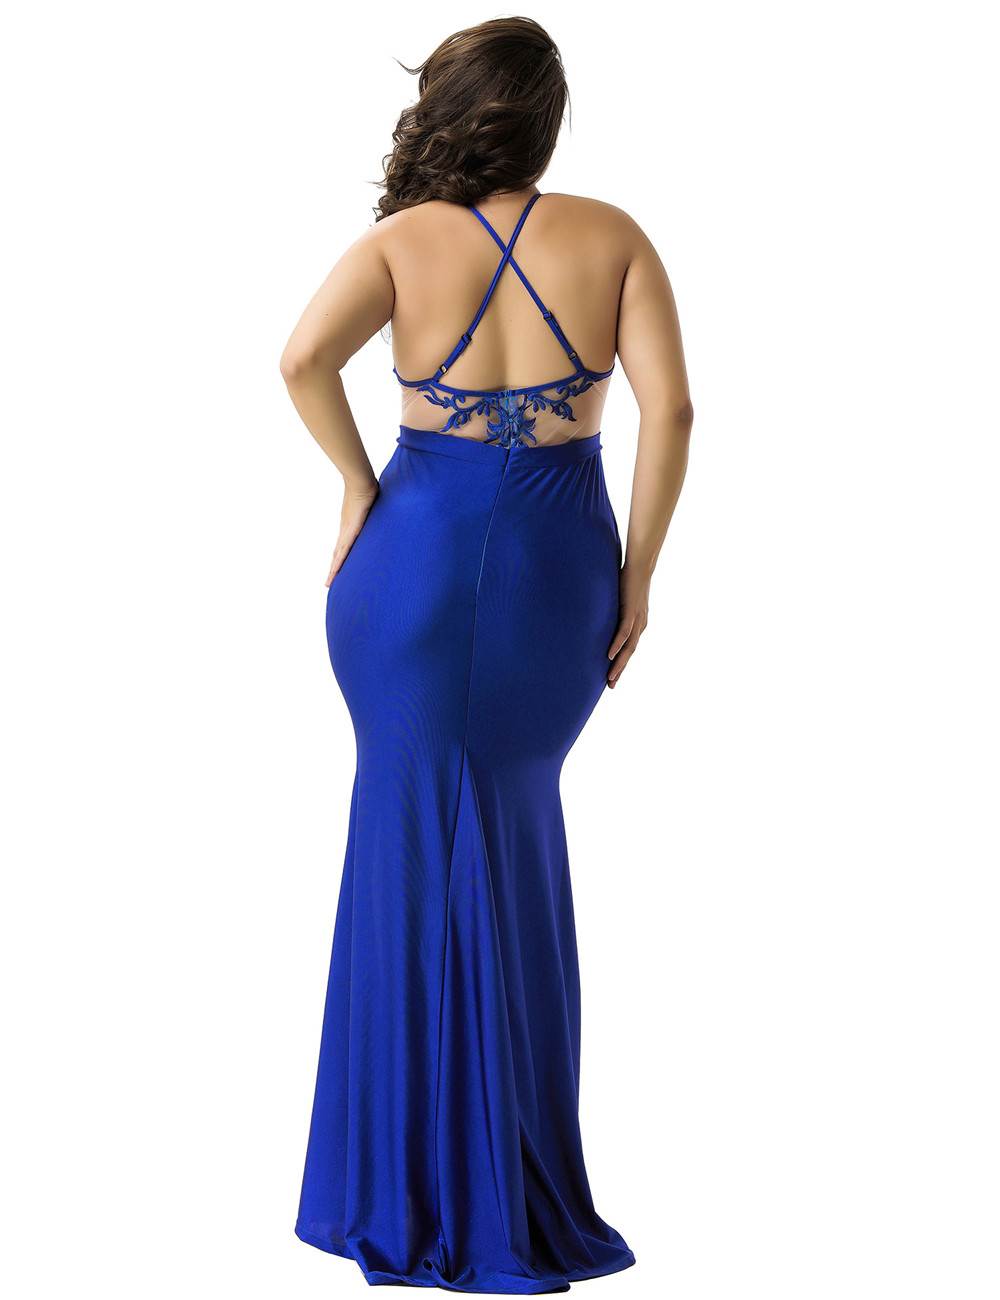 2016 Latest style lady evening dress wholesale price sale hot